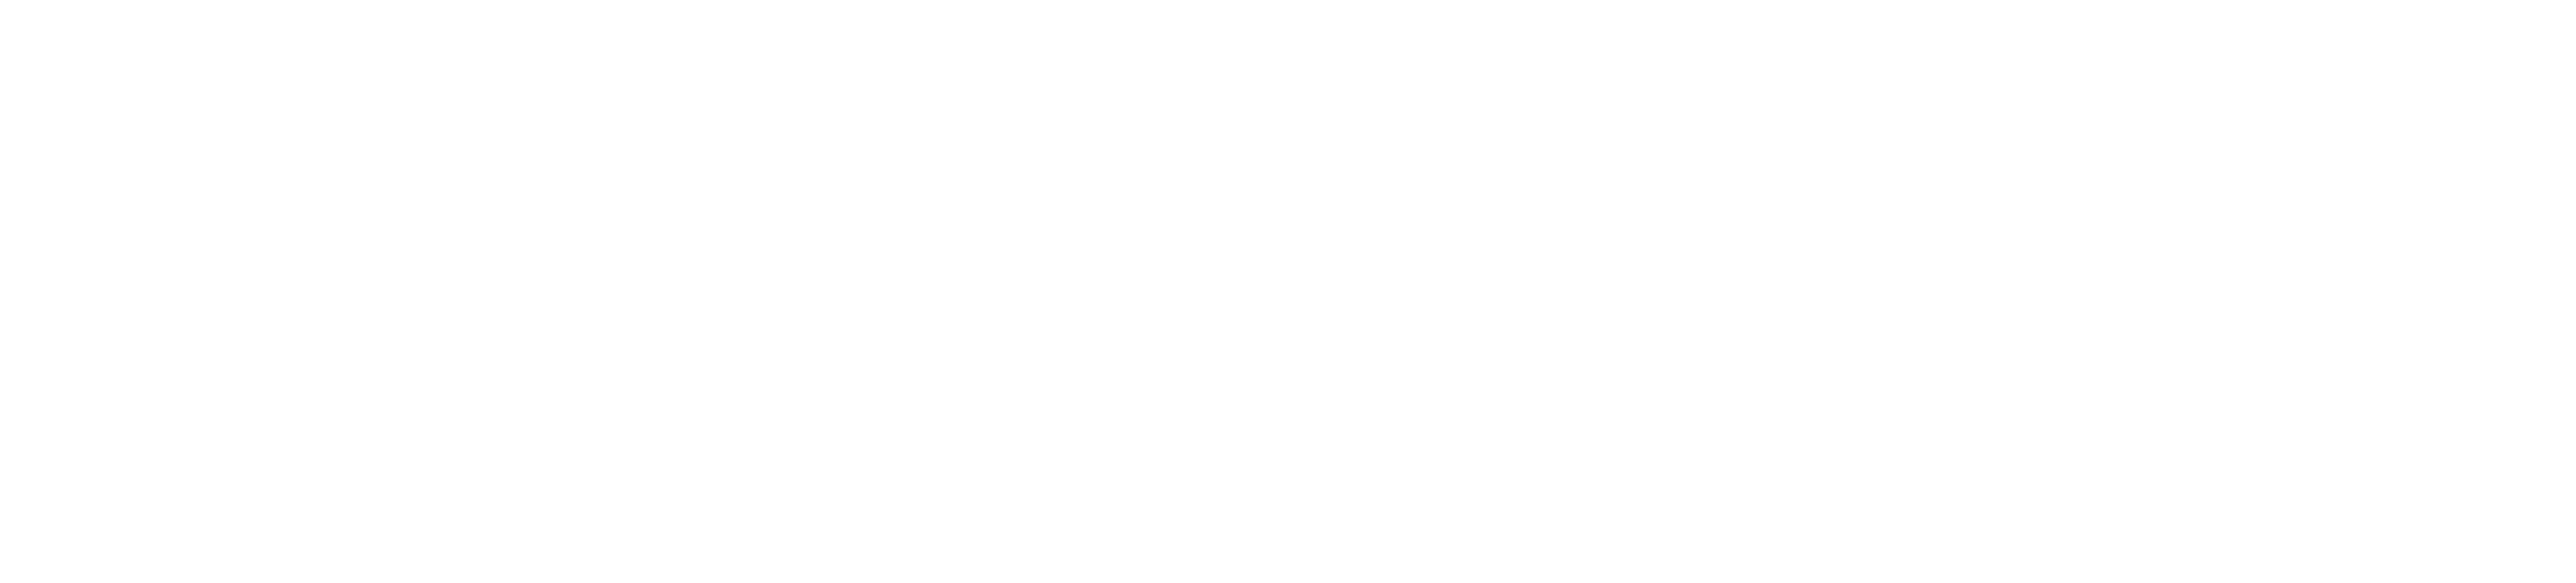 Darwinbox Horizontal Logo_White